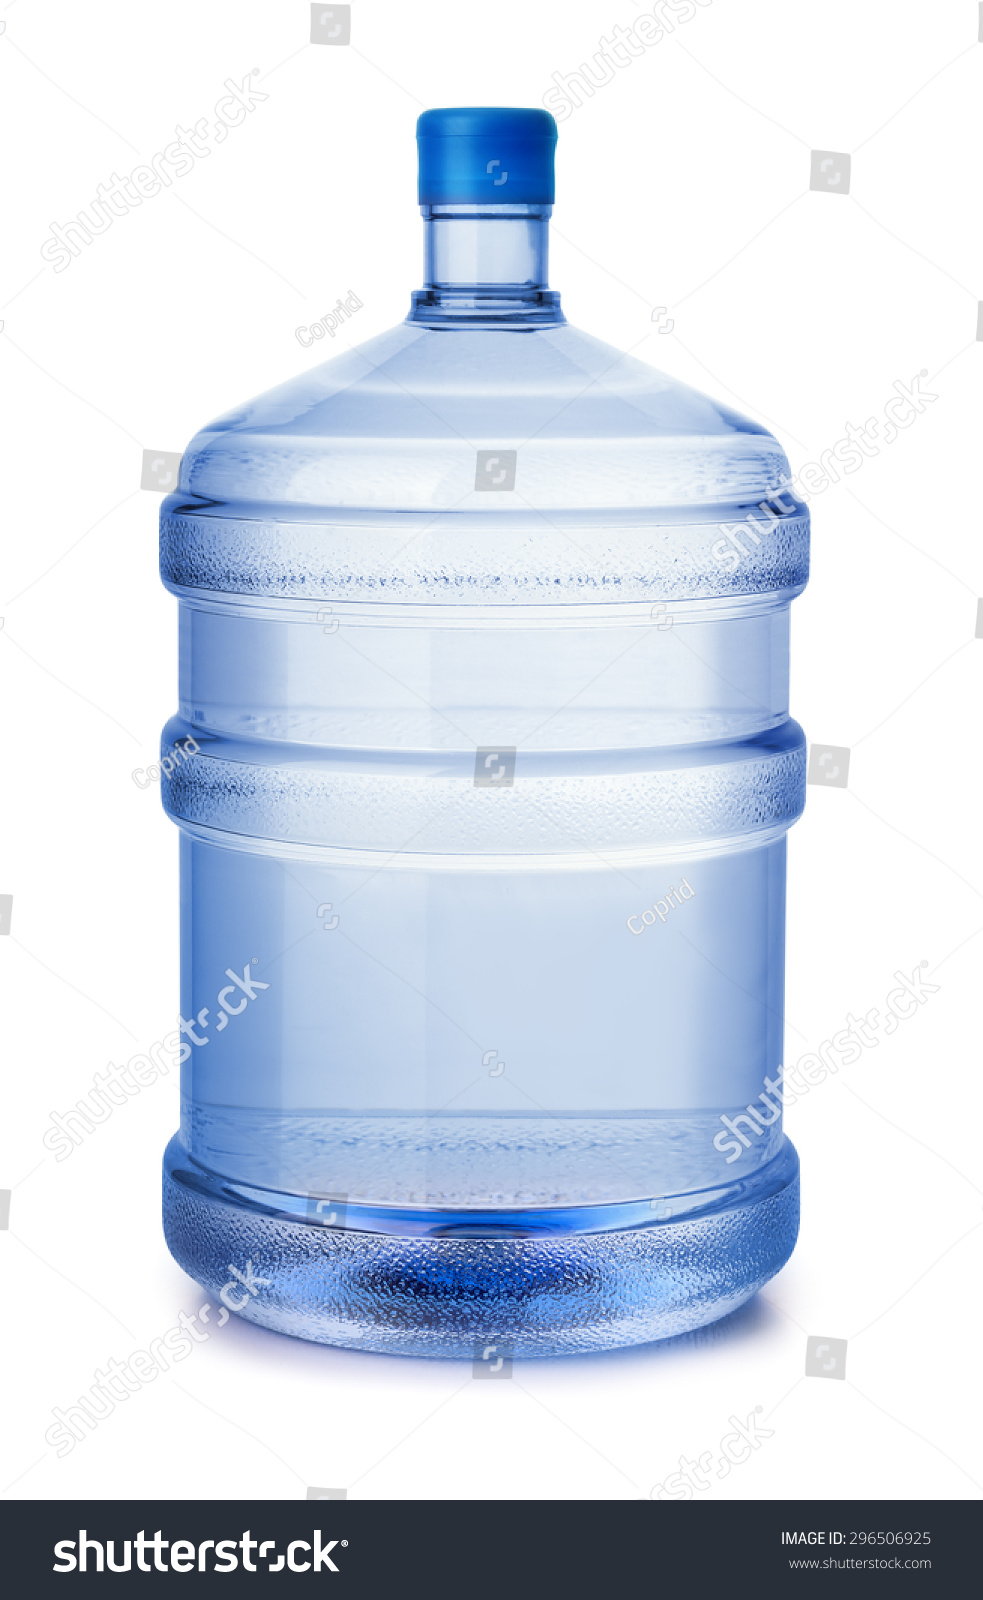 Баллон 19 литров. Бутыль для воды 19л. Бутылка воды 19 л. Баллон воды 19 литров. Бутылка воды 15 литров.